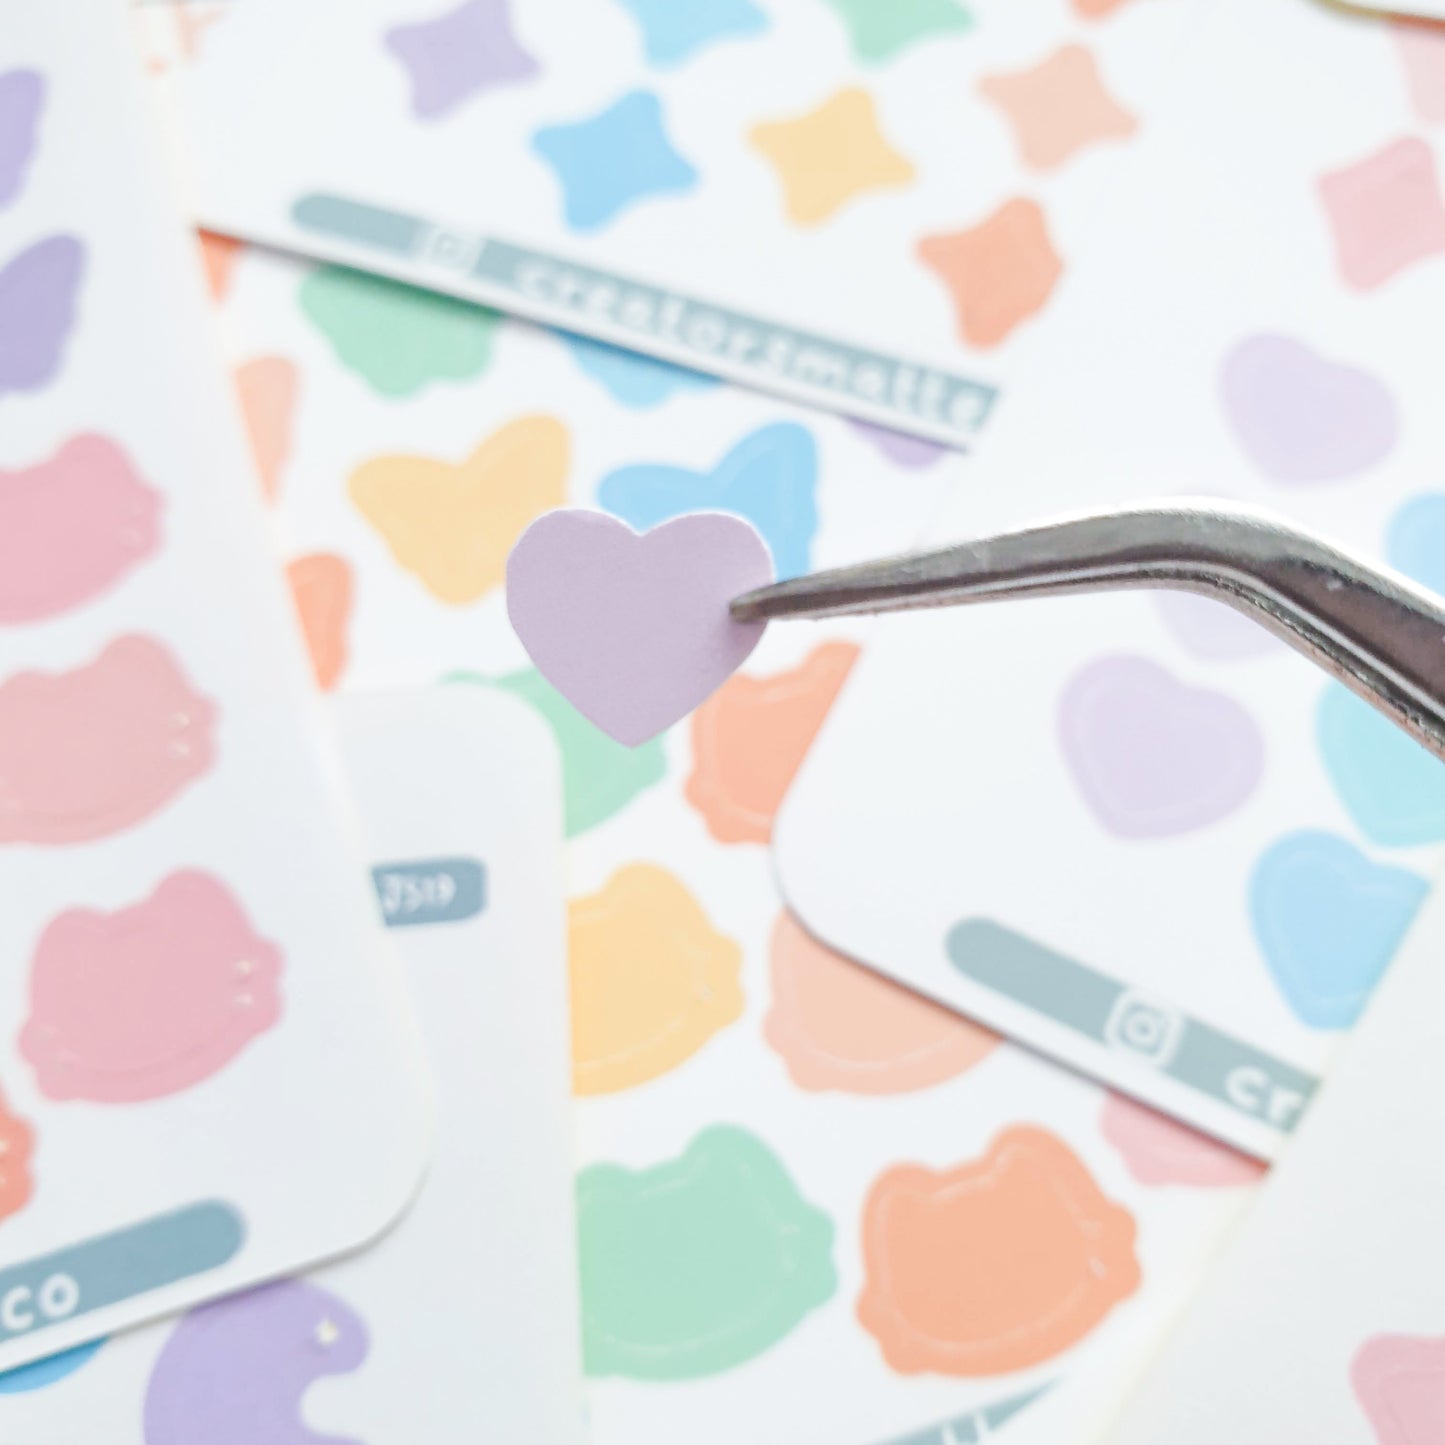 Silhouette (Sparkles & Hearts) Sticker Sheet